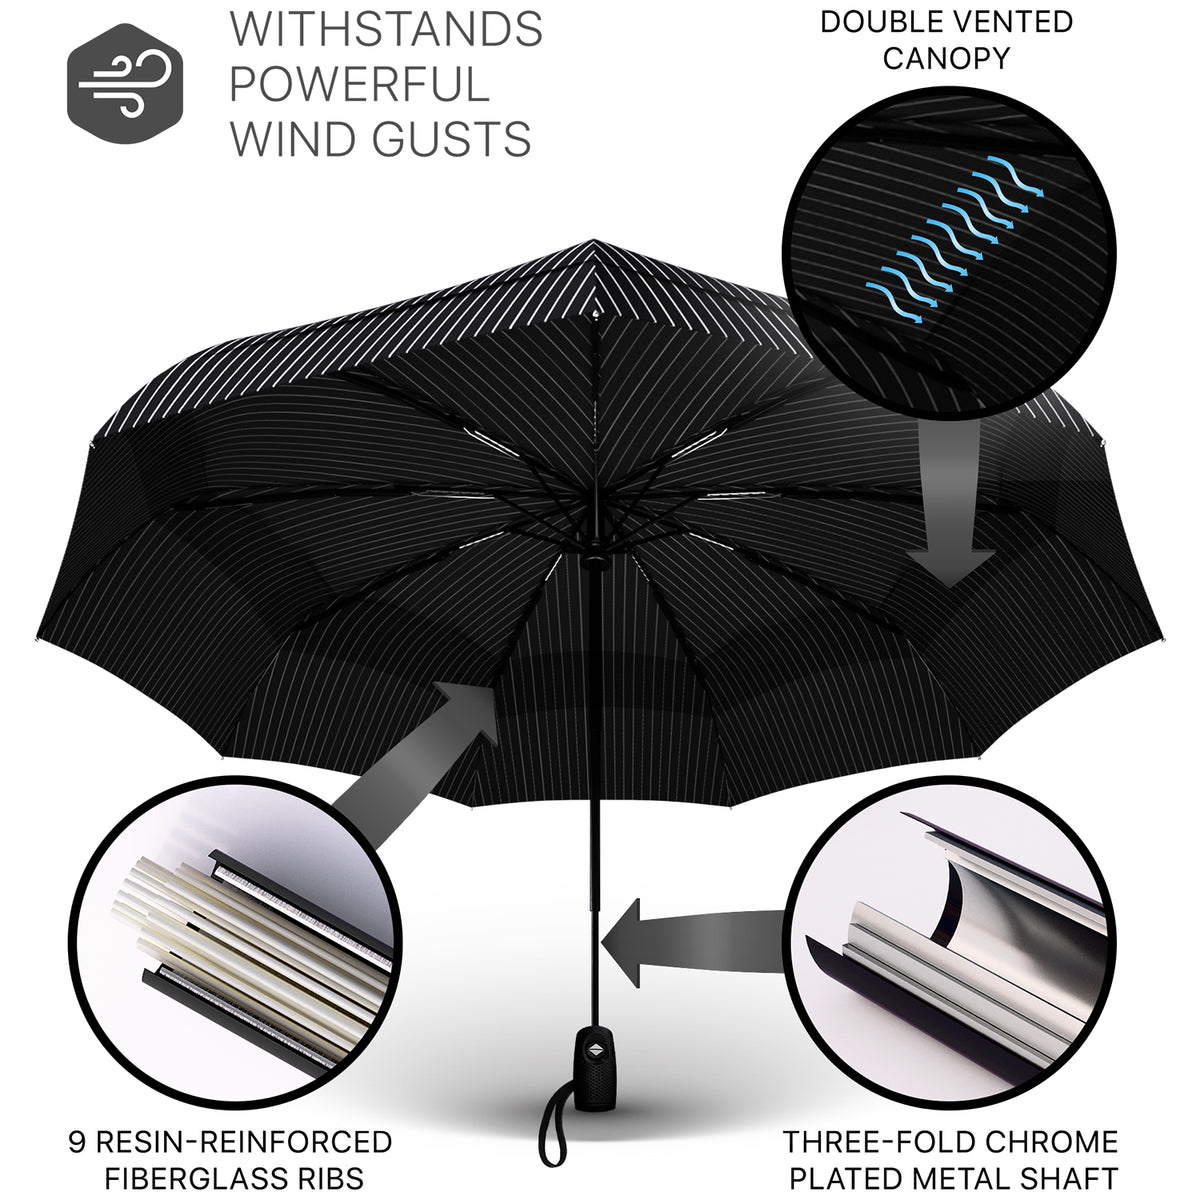 Windproof Travel Umbrella - Compact, Automatic, Pin Stripe